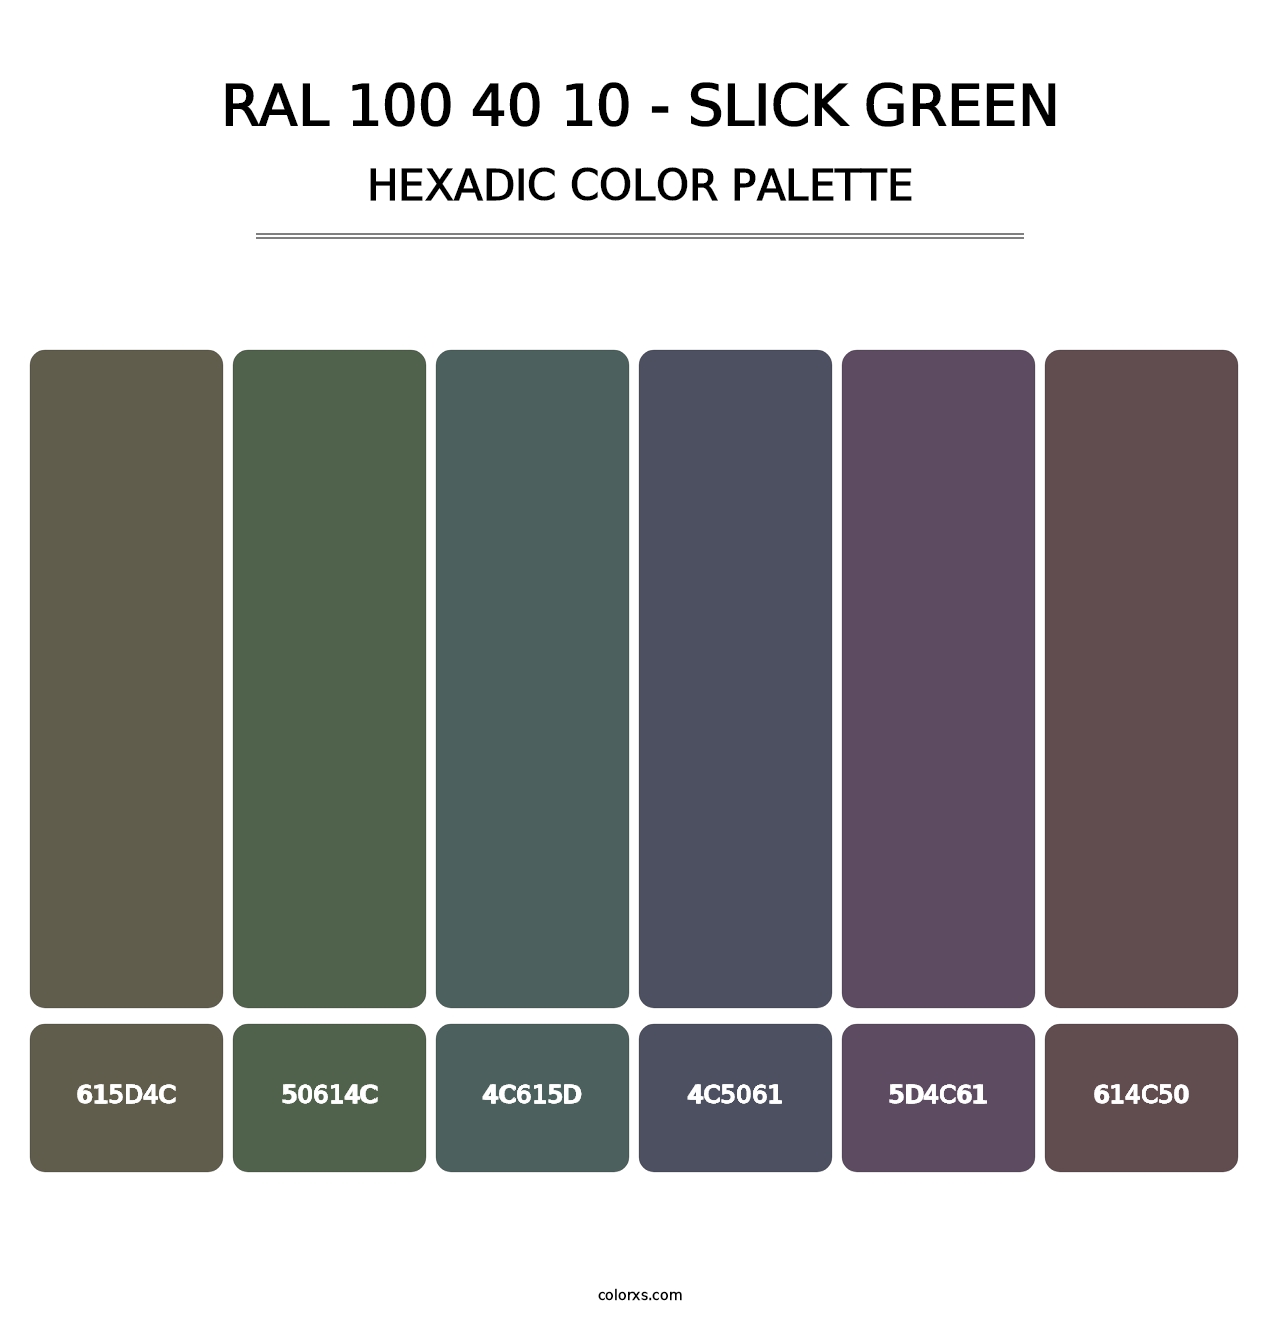 RAL 100 40 10 - Slick Green - Hexadic Color Palette